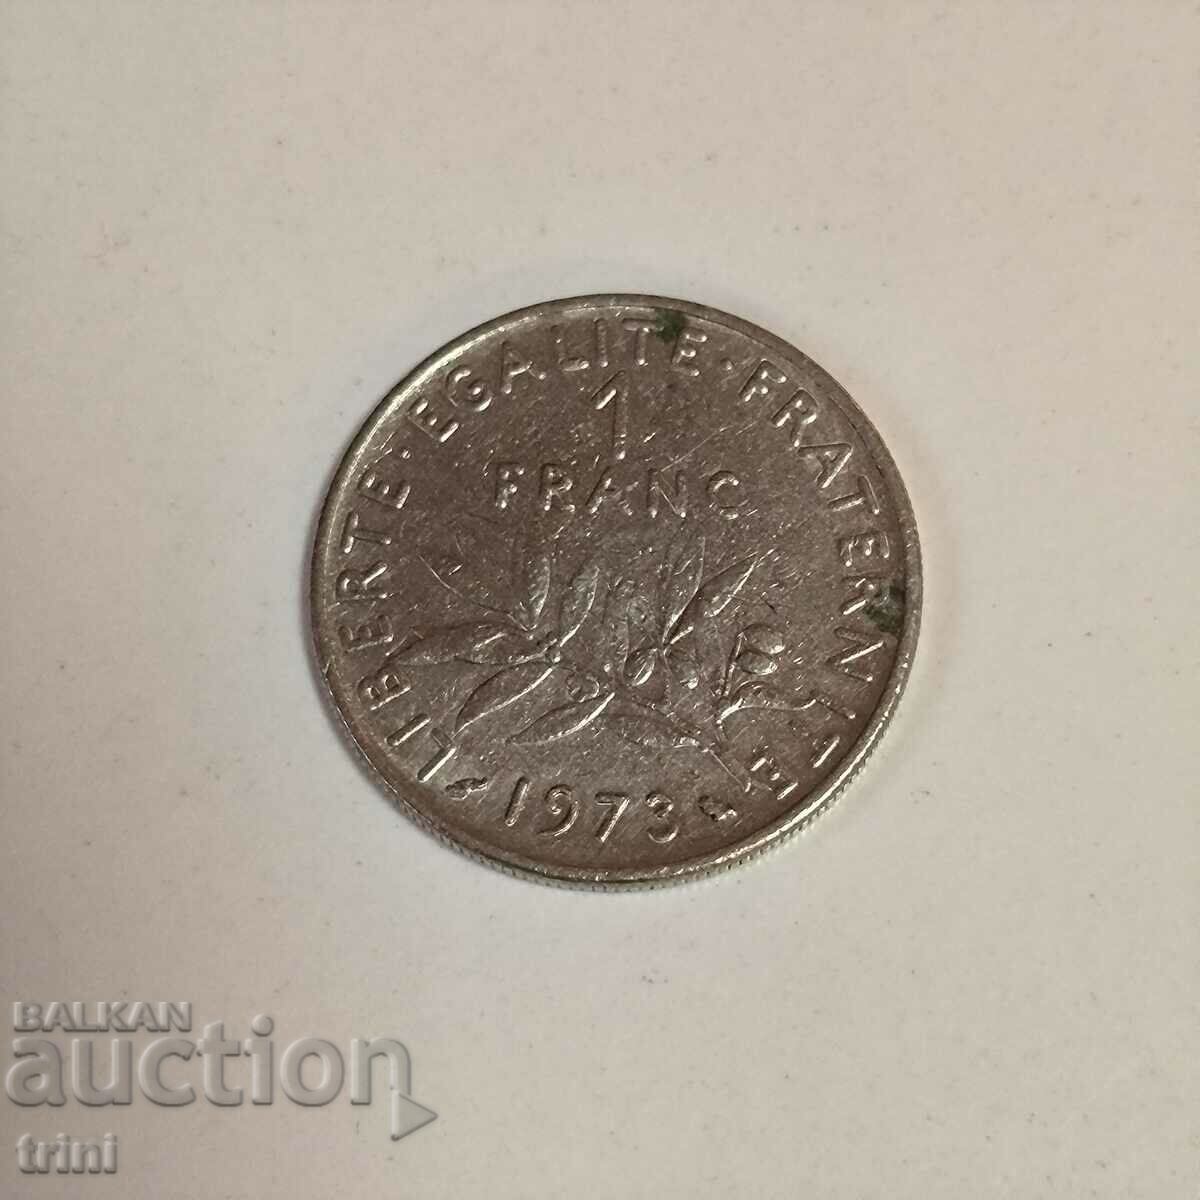 France 1 franc 1973 year g37